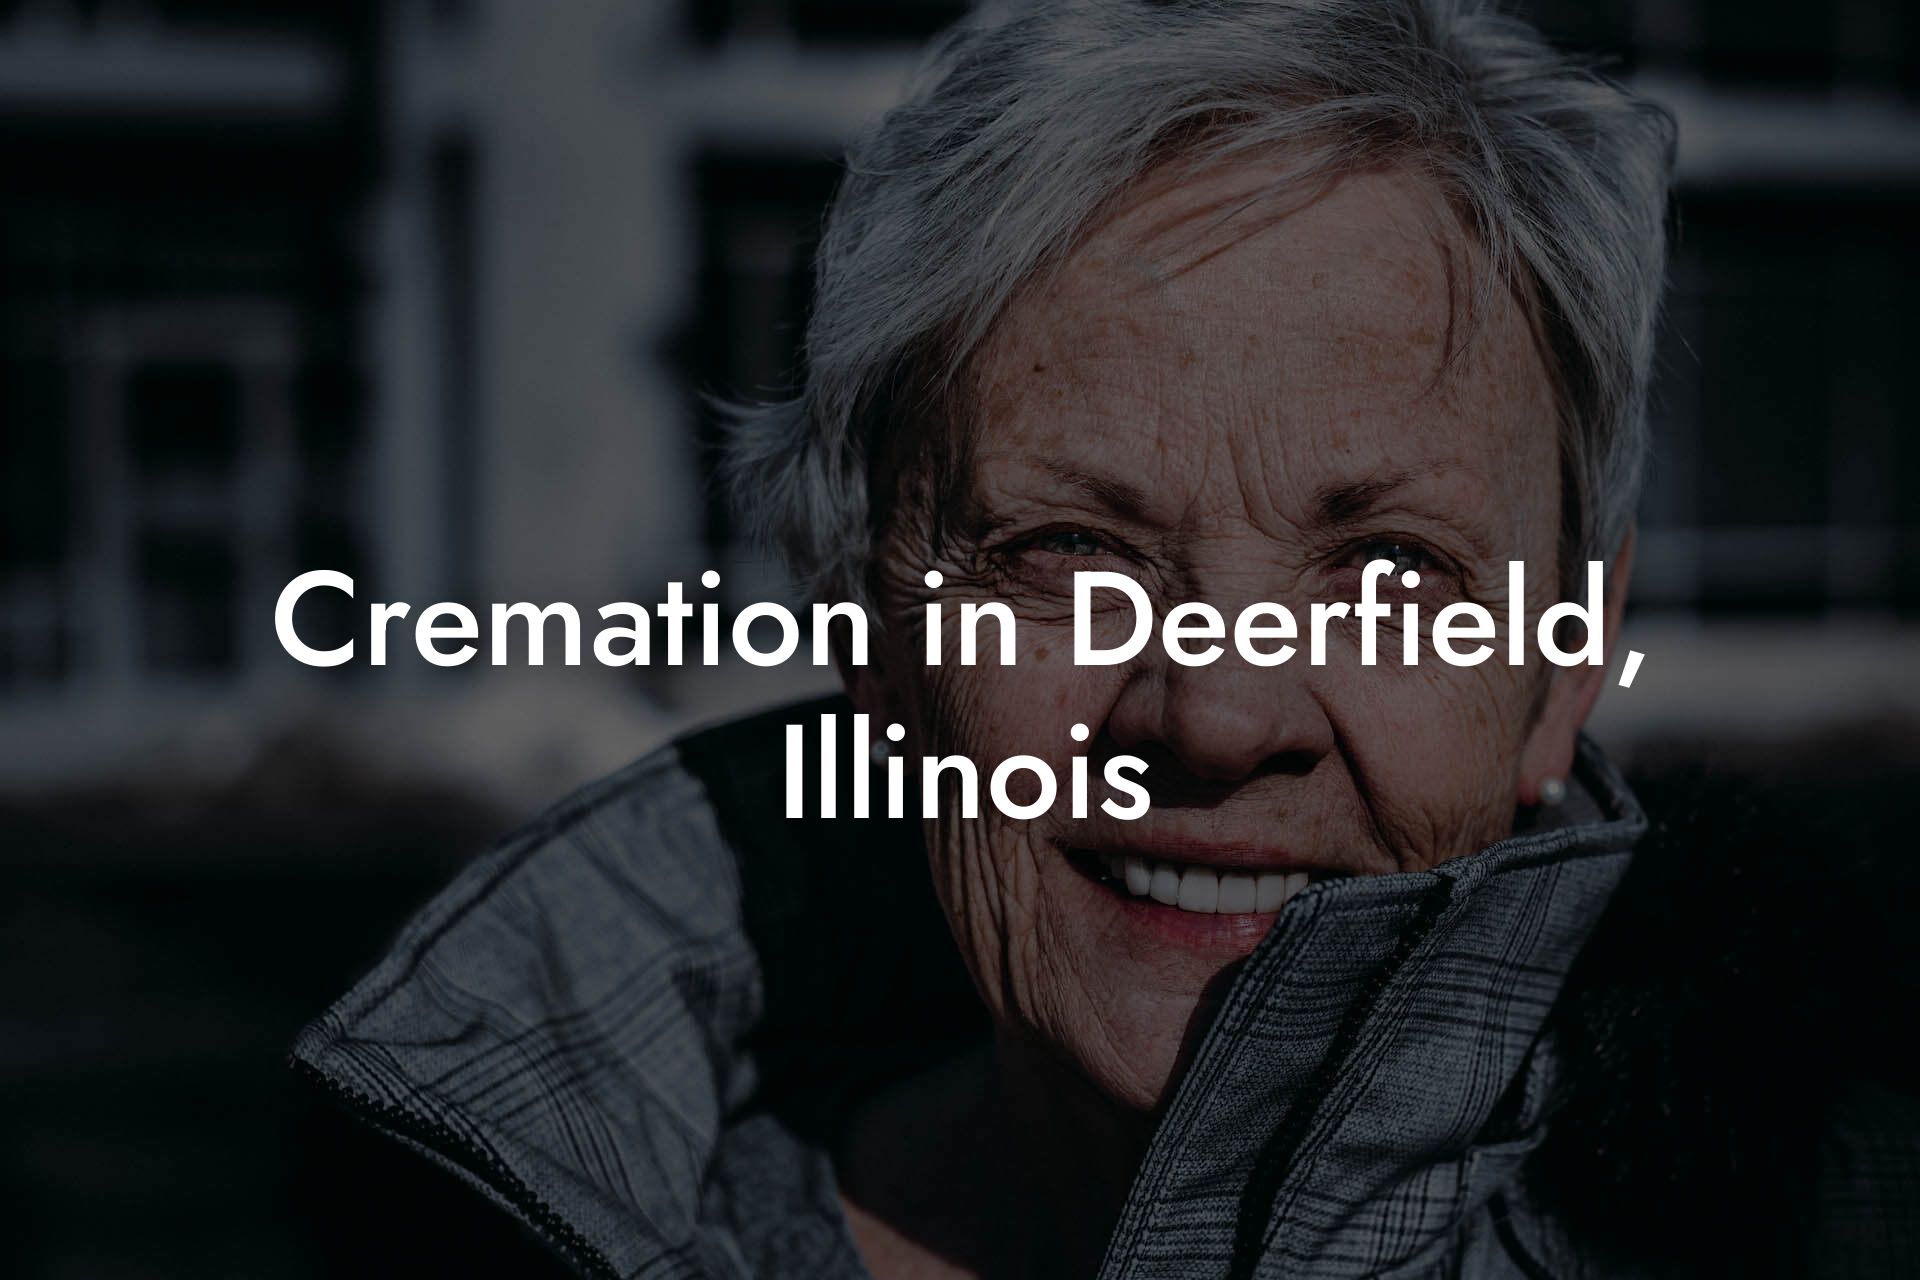 Cremation in Deerfield, Illinois